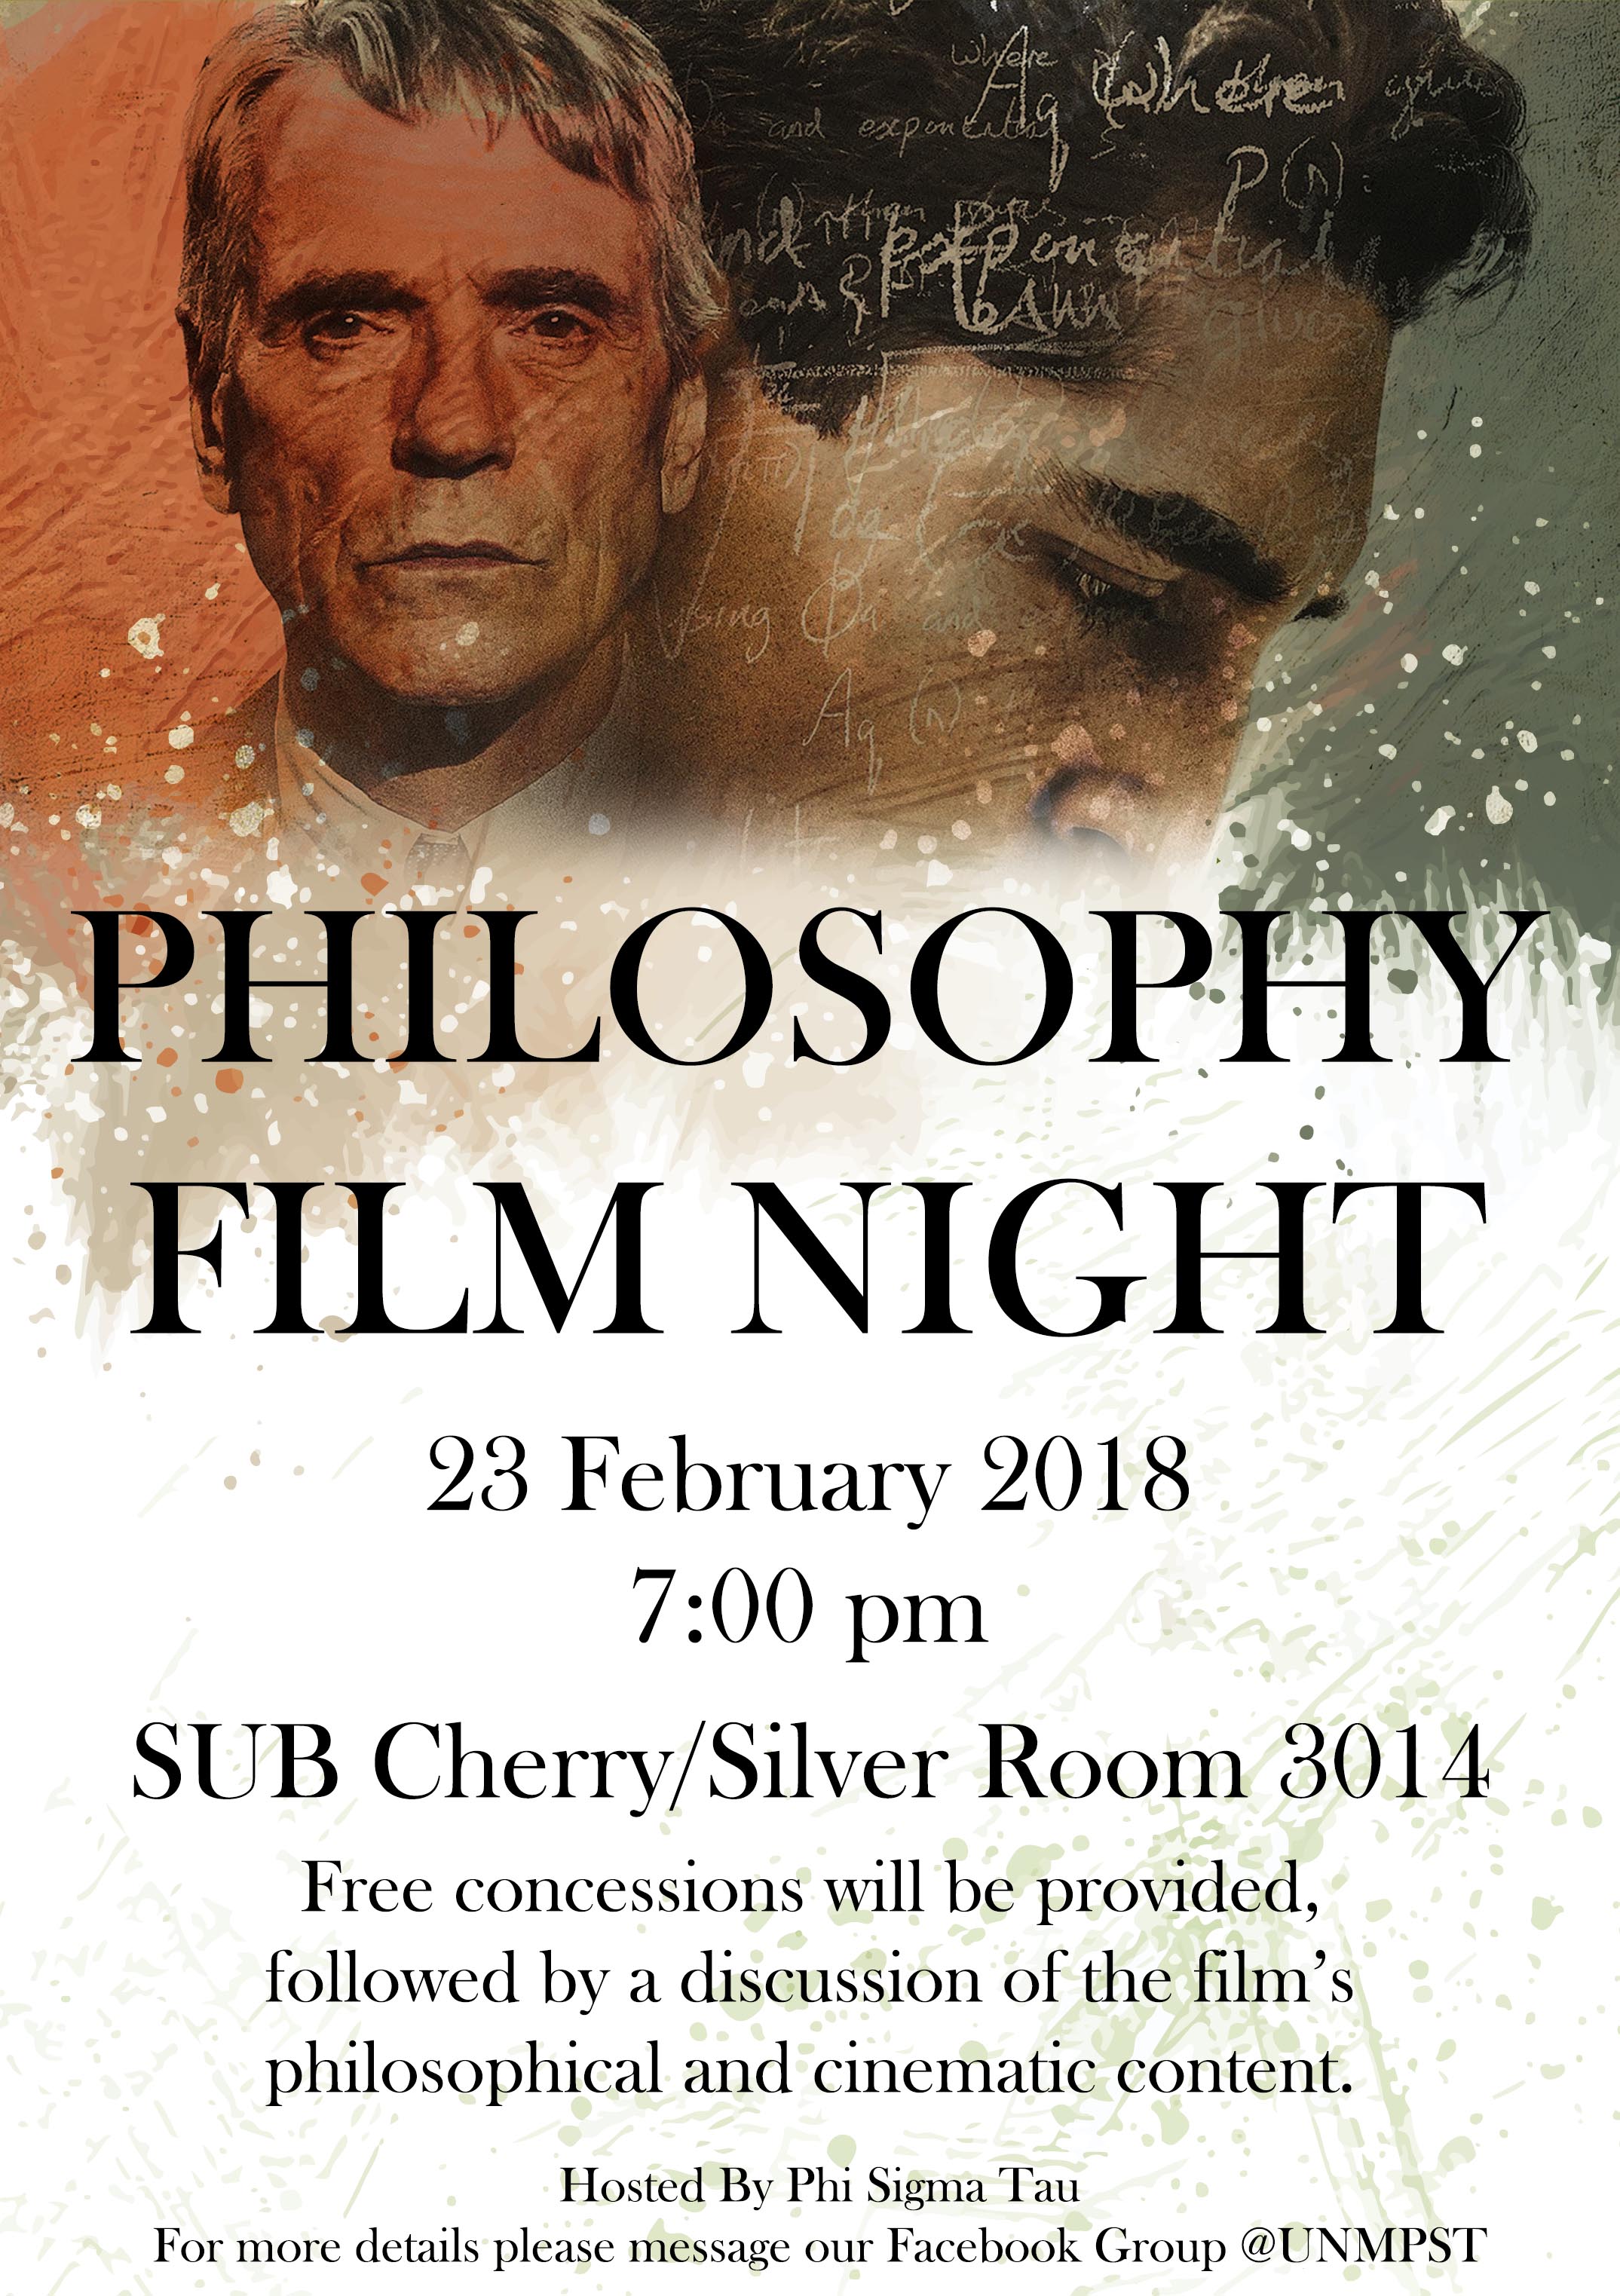 Philosophy Film Night Flyer 